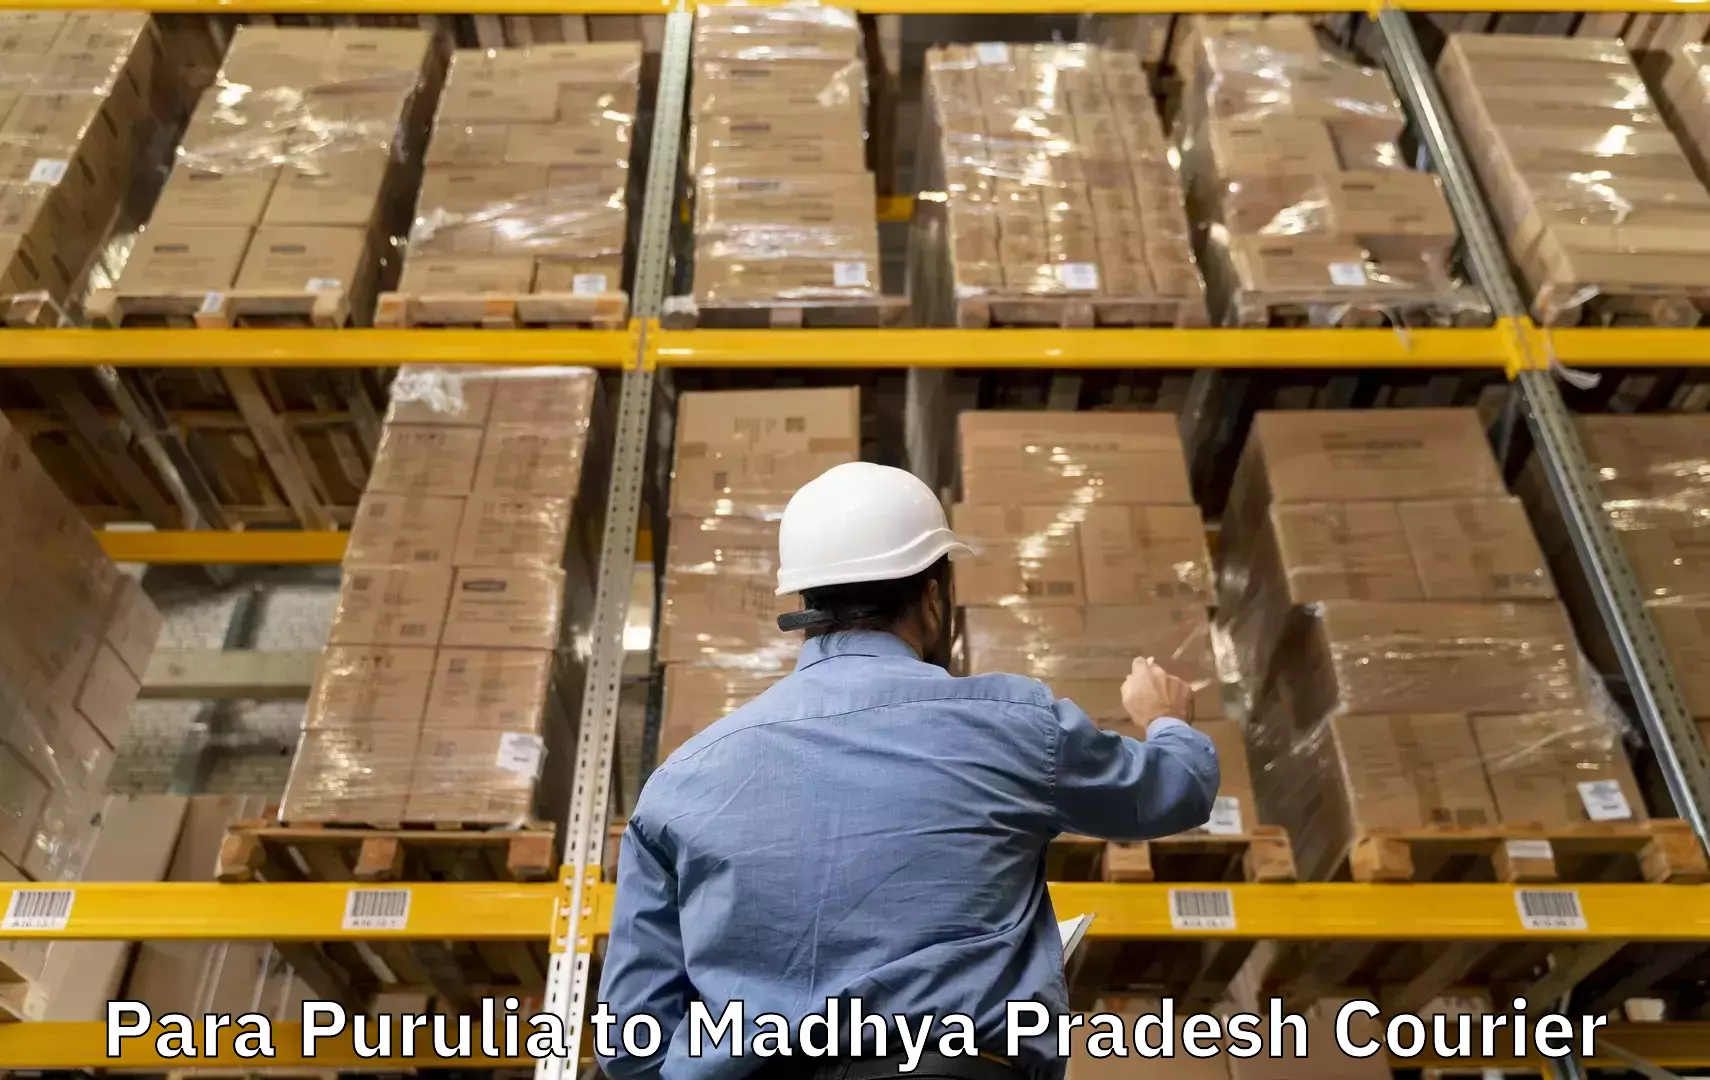 Luggage transport company Para Purulia to Ratlam